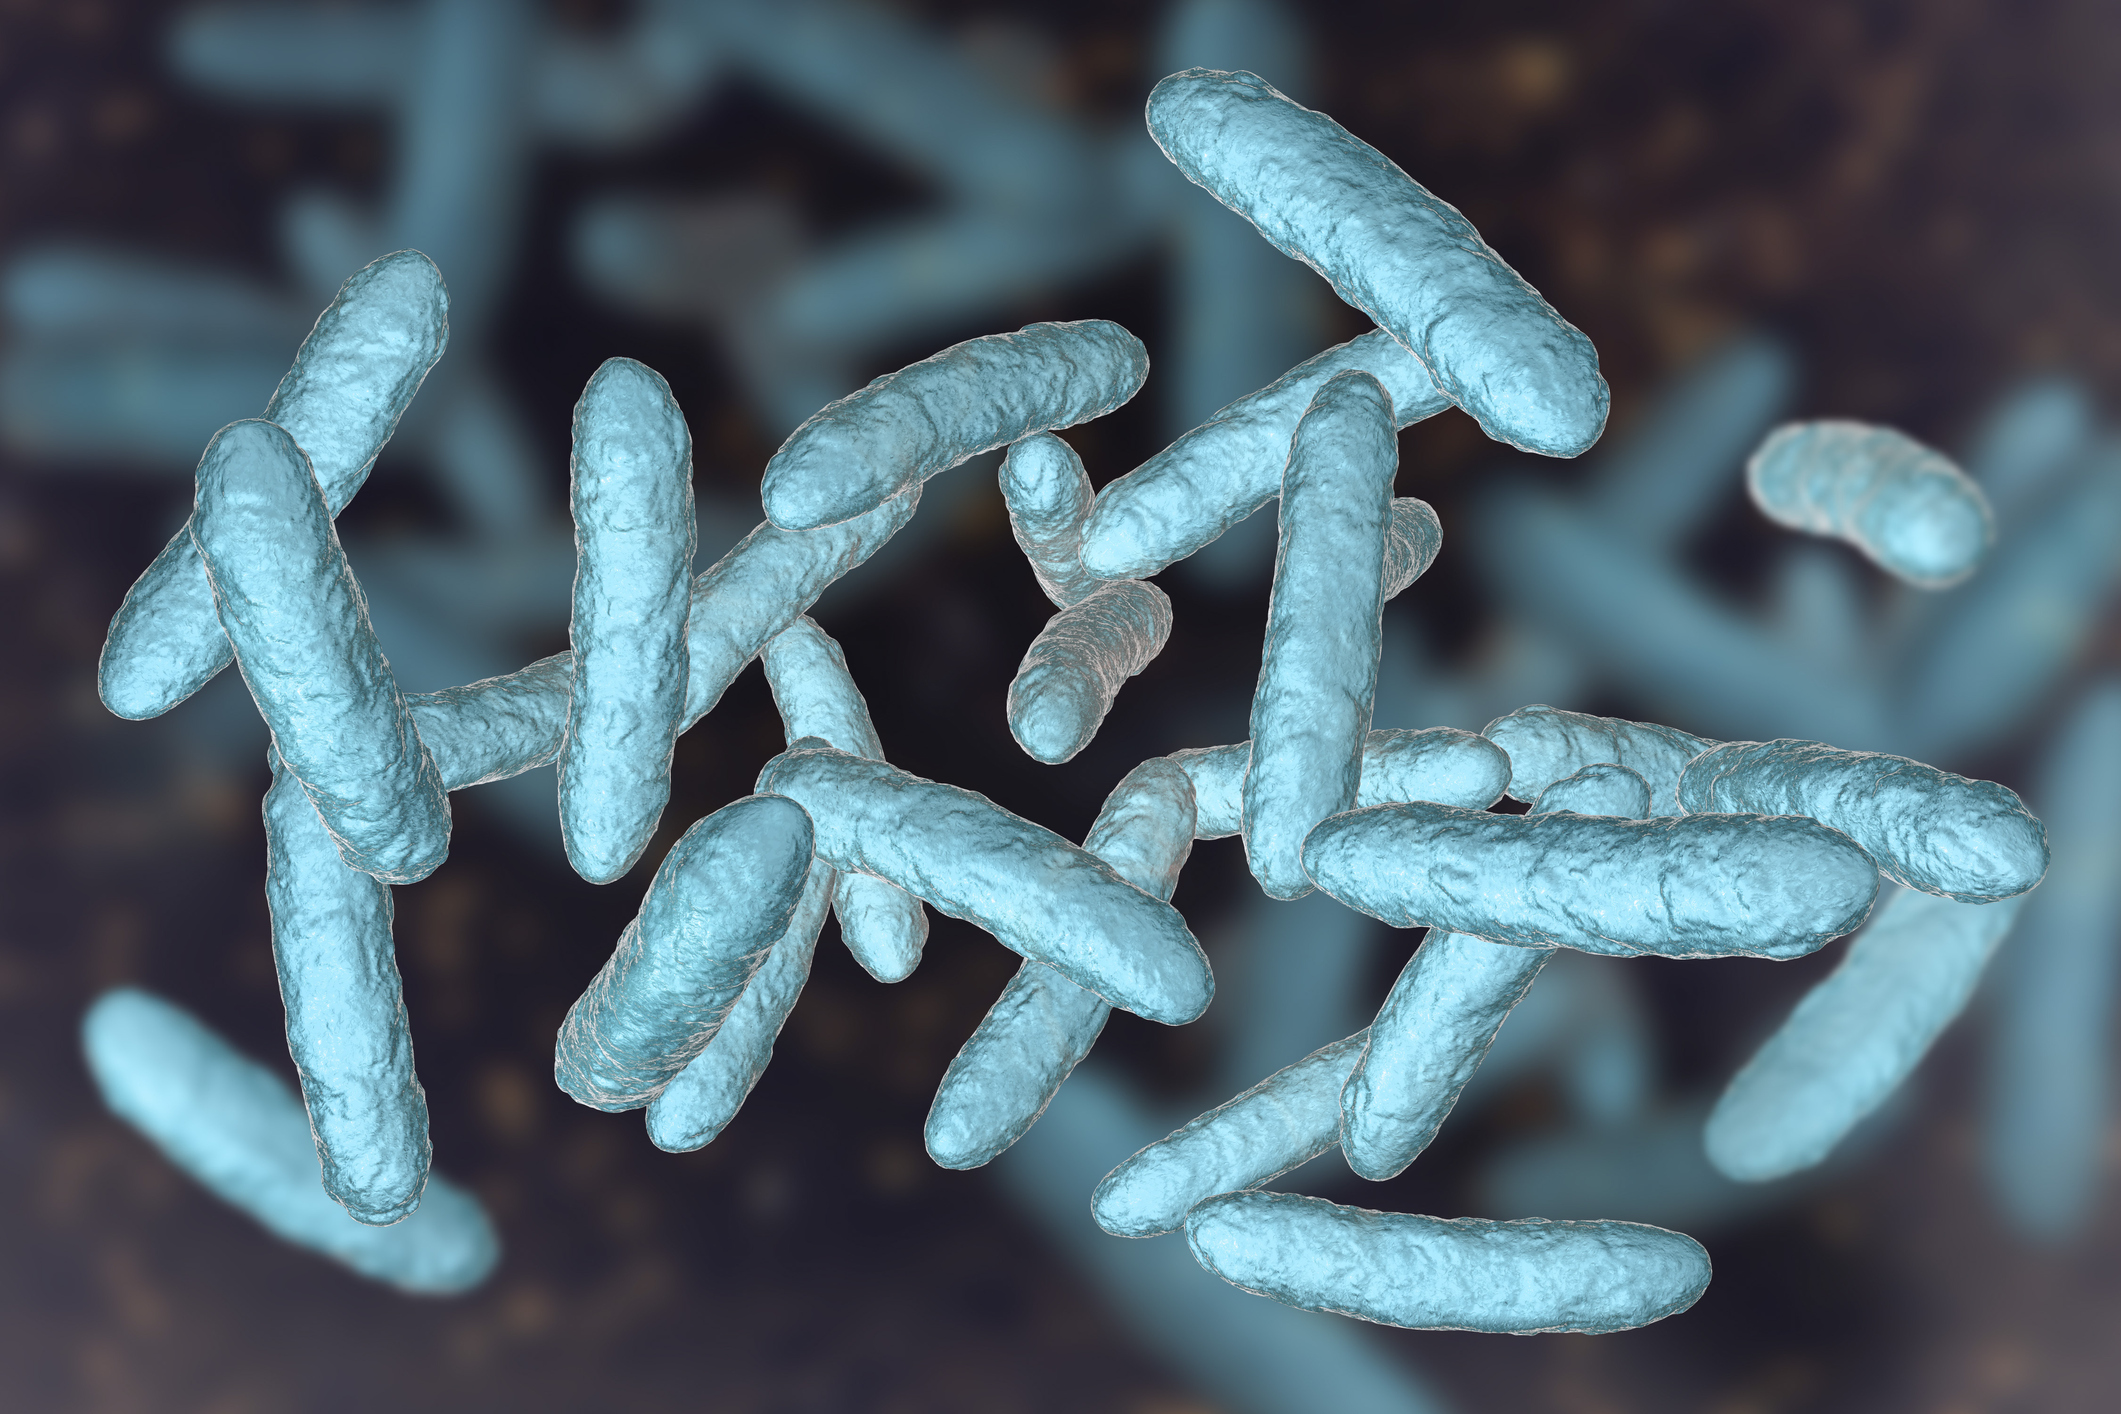 The microbe shortage spreading disease